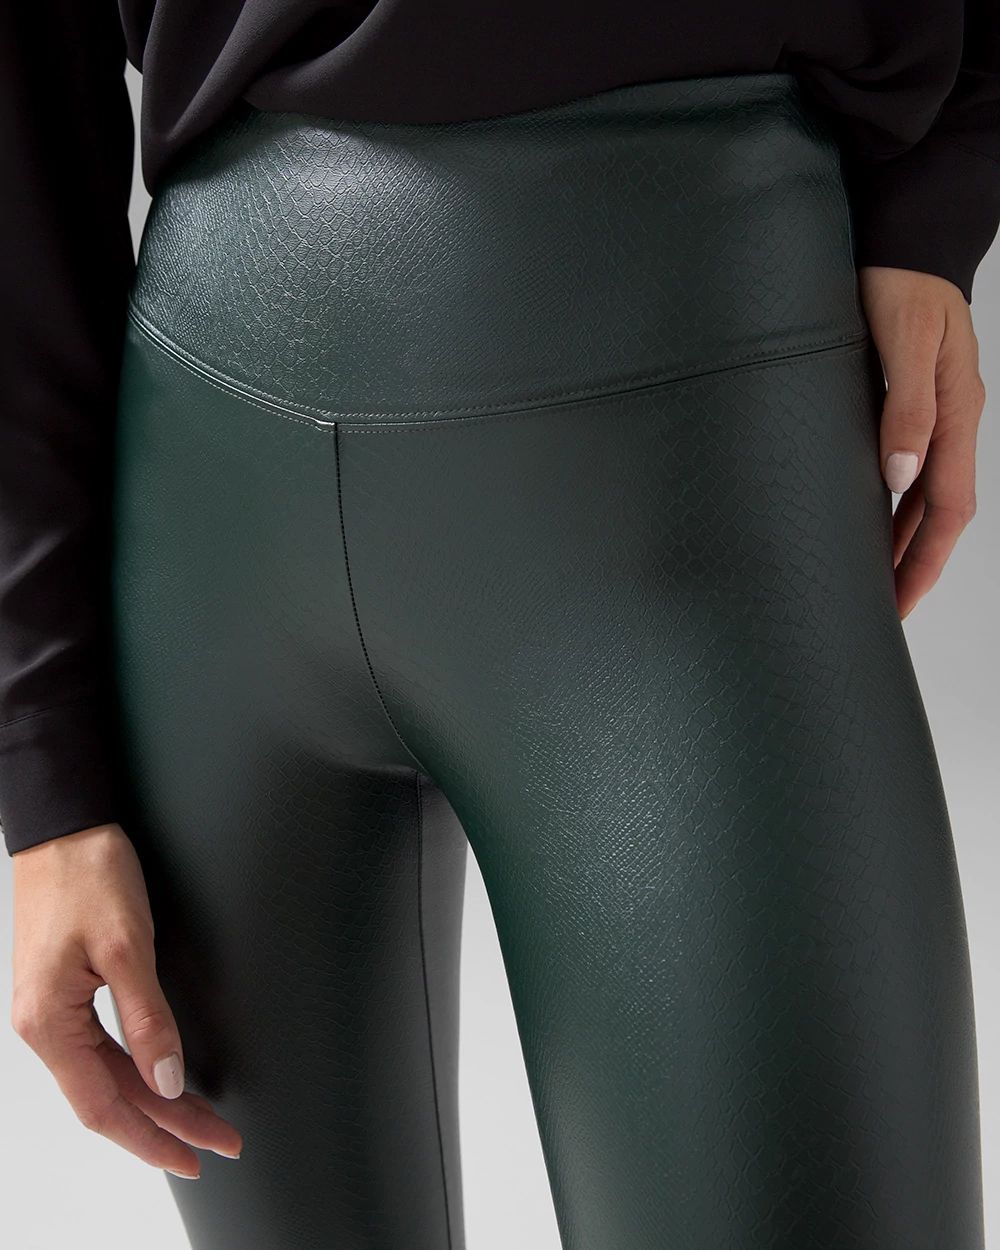 Vegan Leather WHBM® Runway Legging click to view larger image.